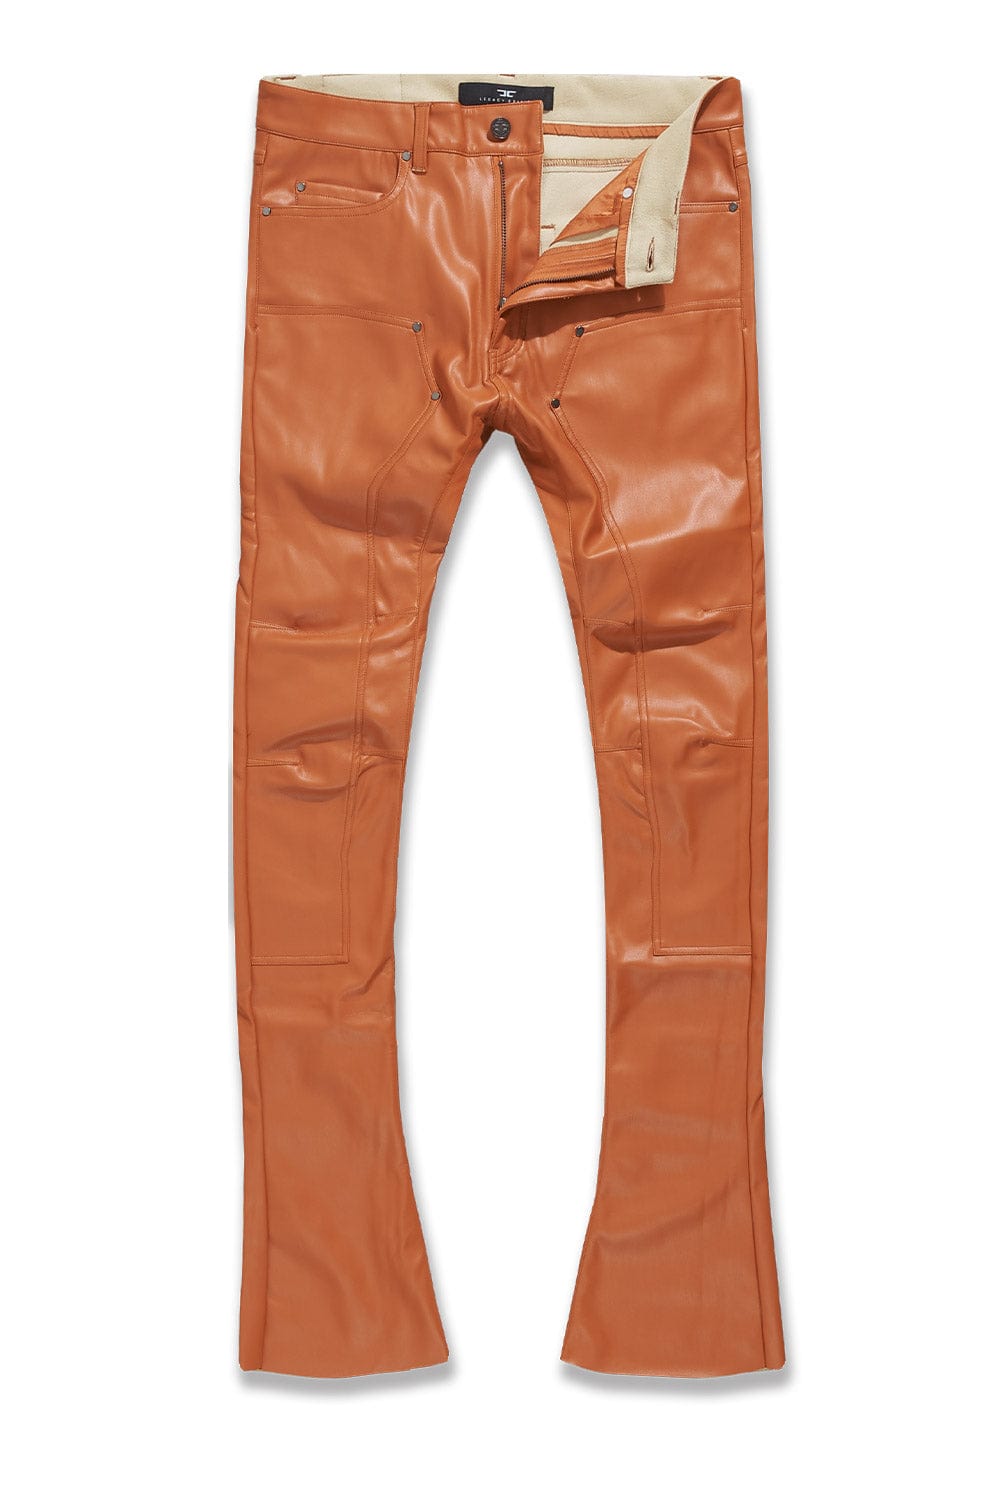 Jordan Craig Ross Stacked - Monte Carlo Pants (Burnt Orange) 28 / Burnt Orange